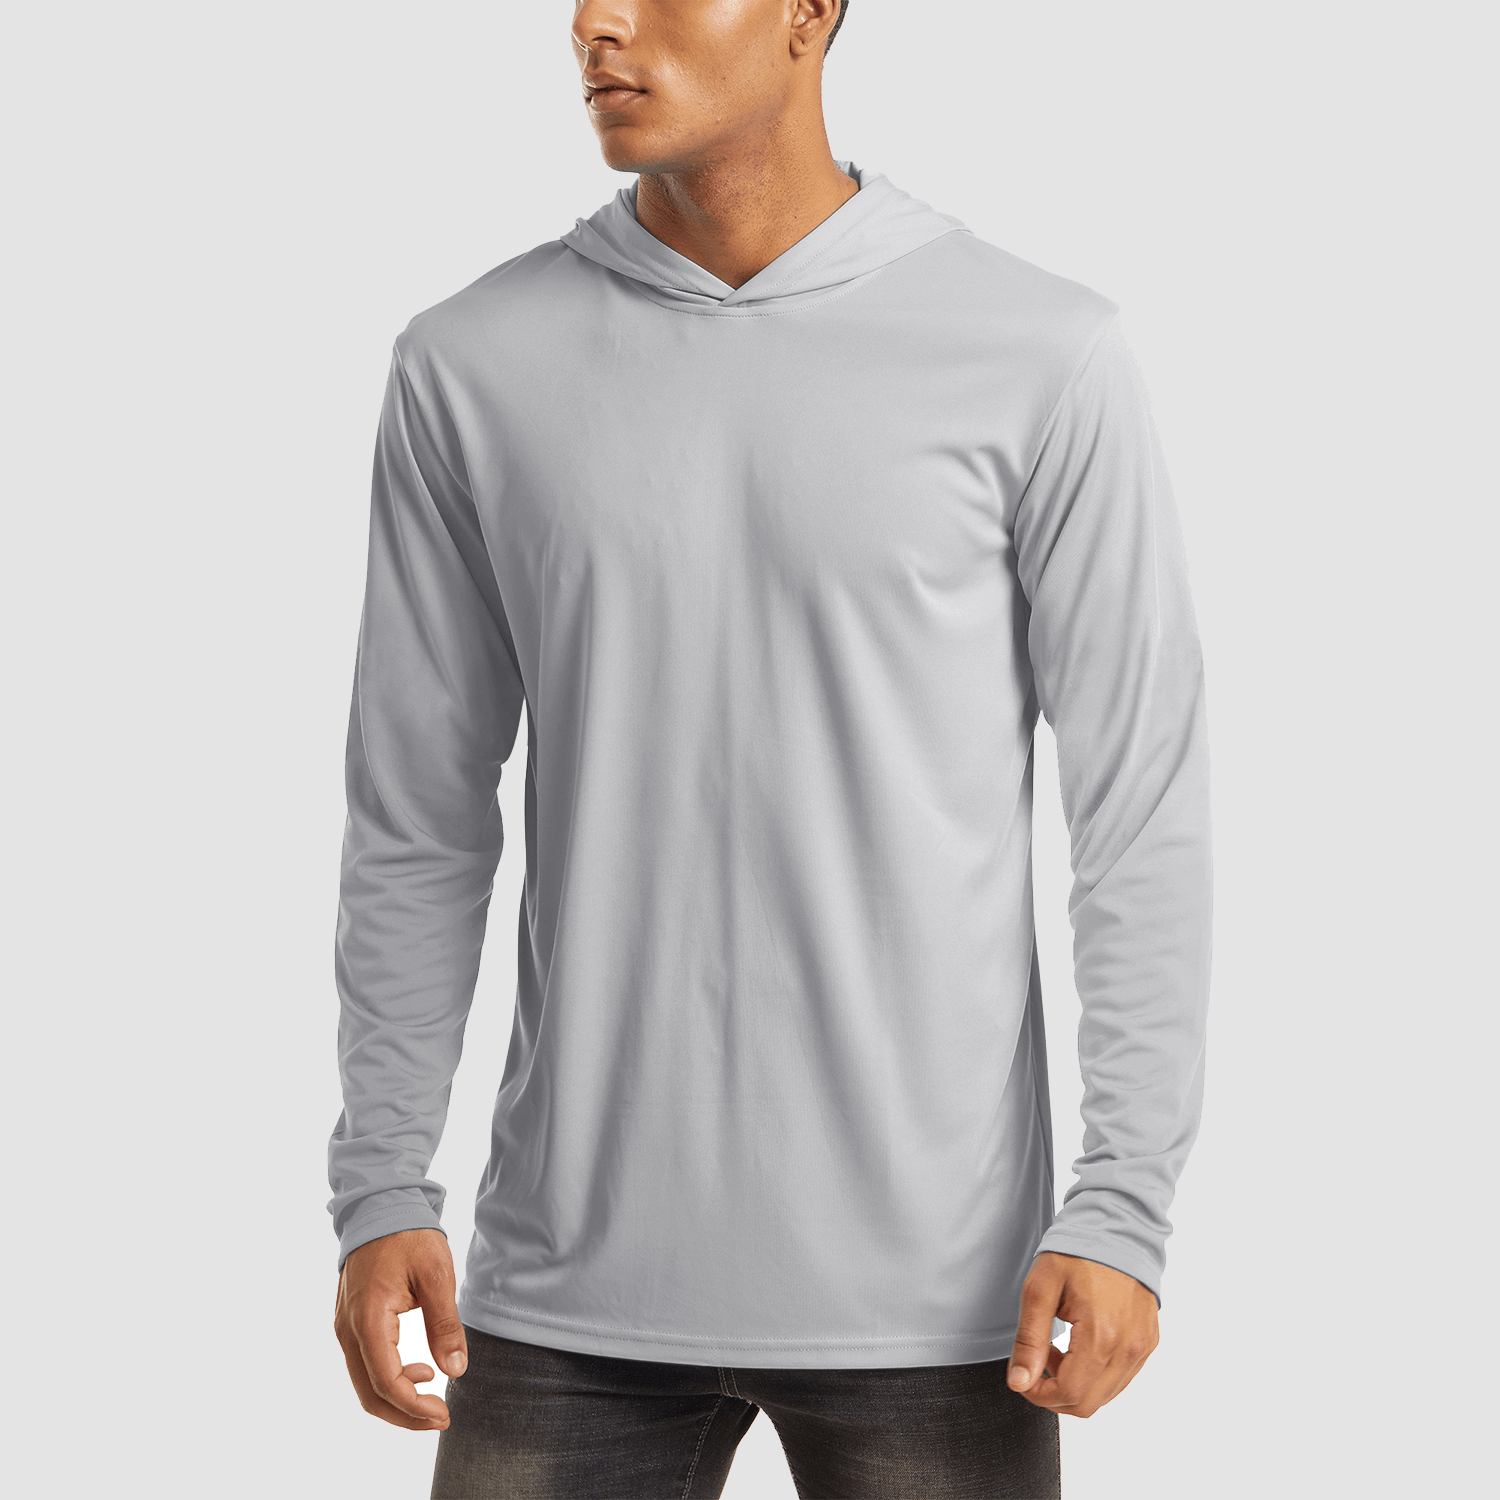 【Buy 4 Get 4th Free】Men's Long Sleeve Hooded Shirt UPF 50+ Athletic Shirts, Grey / XL